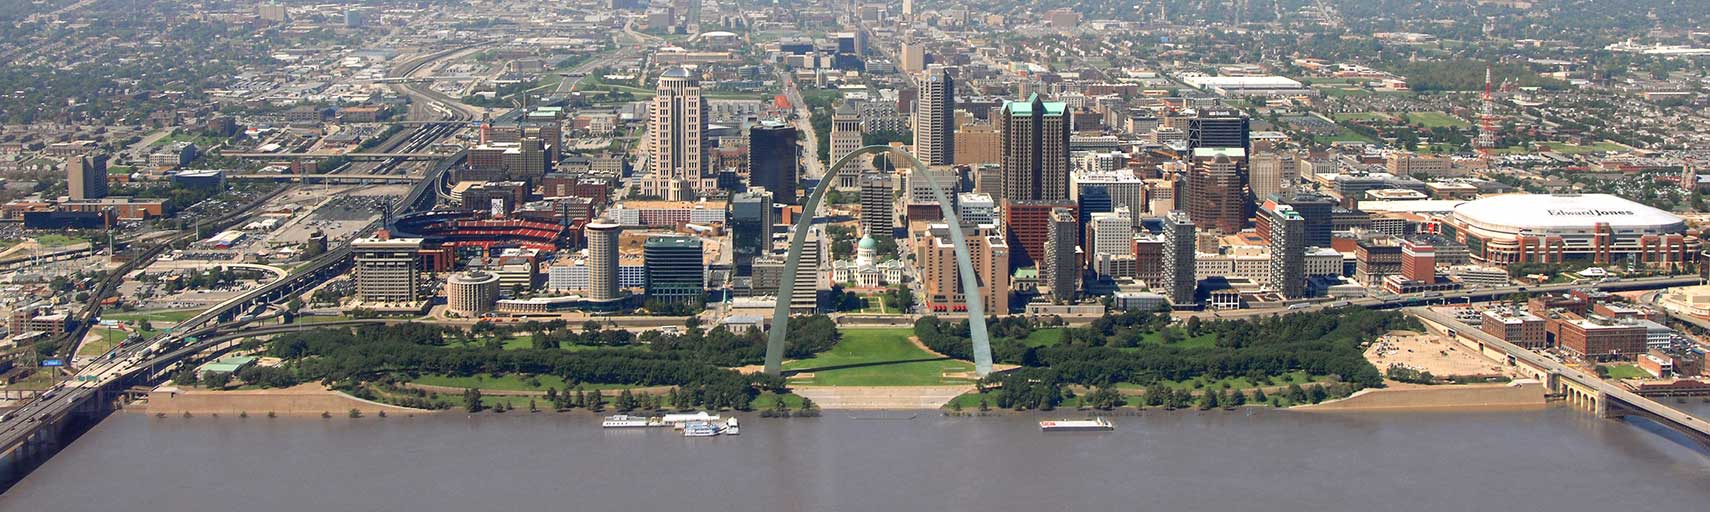 Google Map of the City of Saint Louis, Missouri, USA - Nations